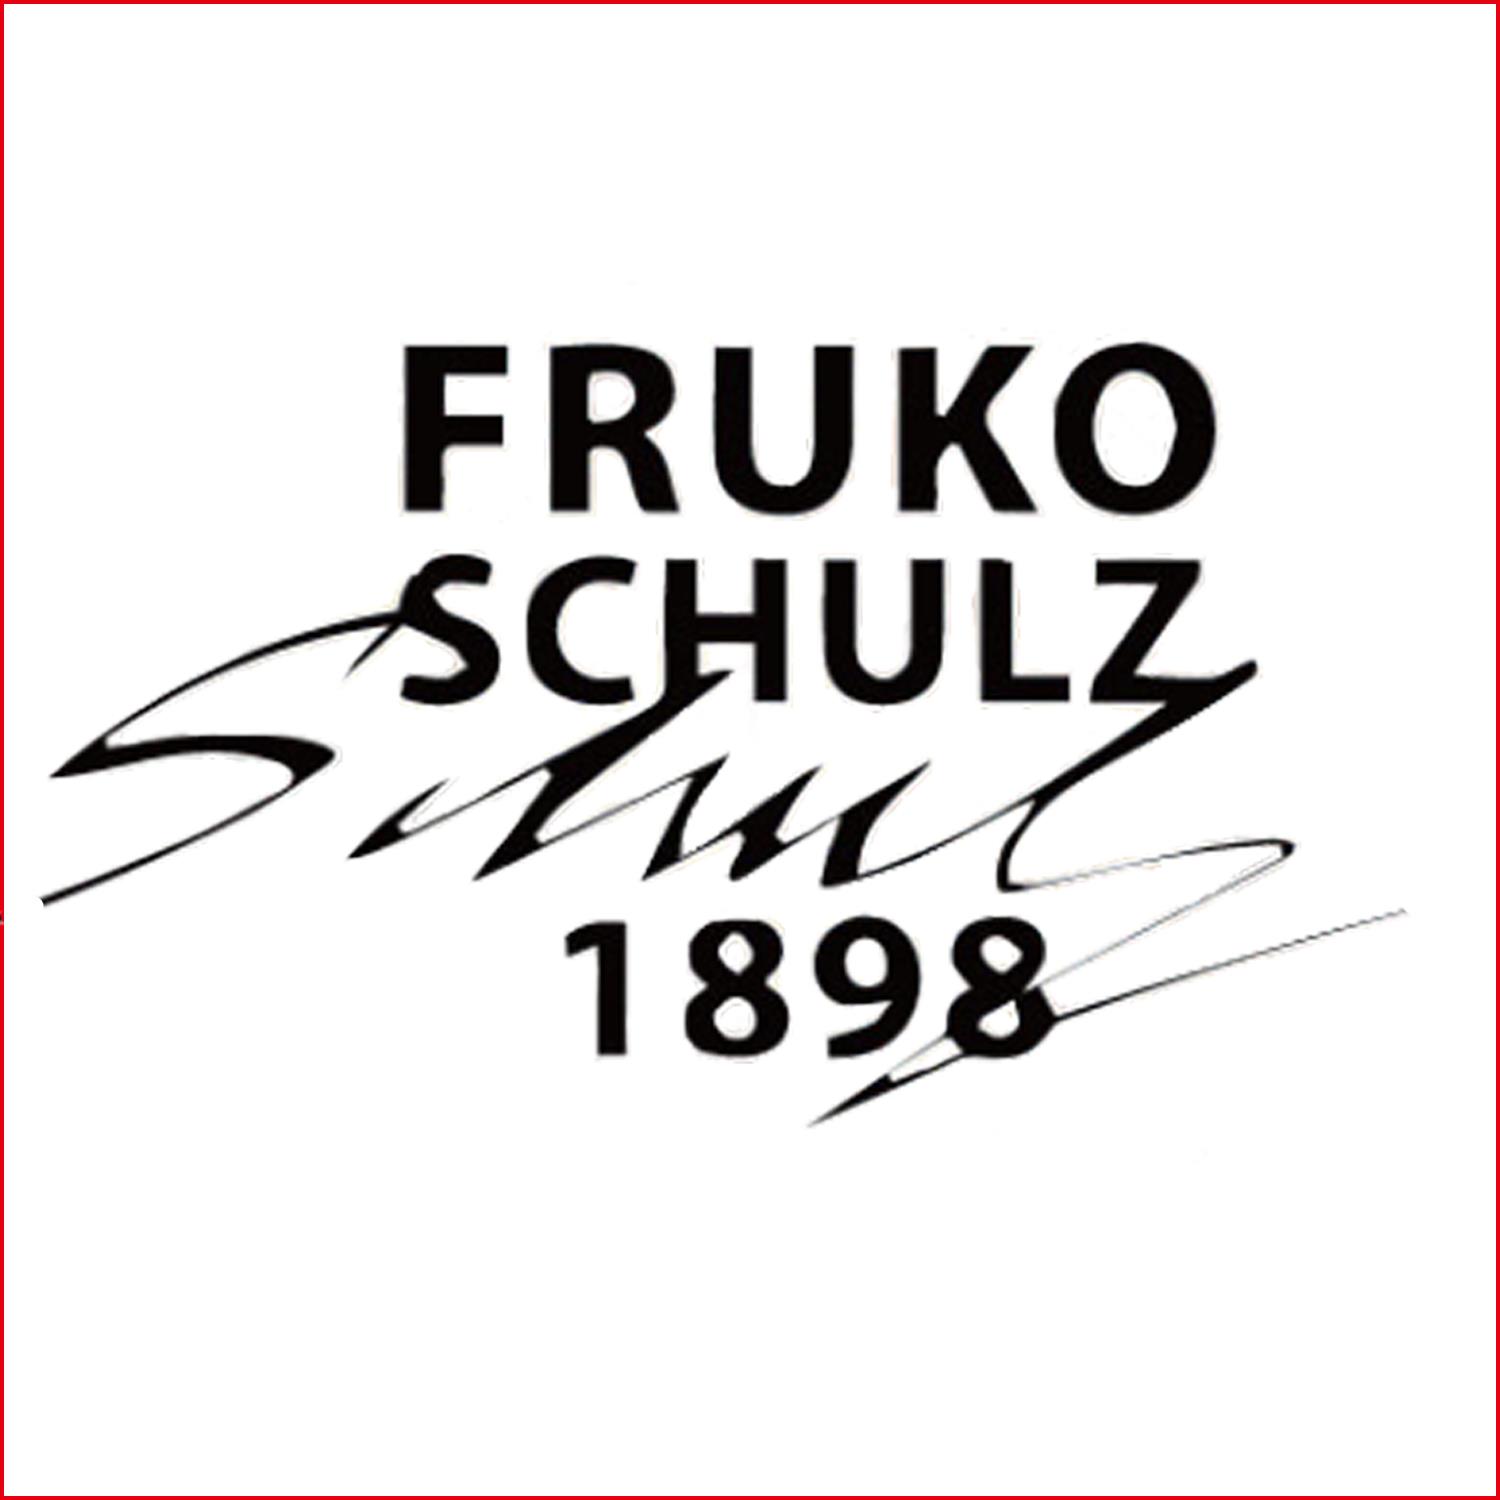 伏可 Fruko Schulz